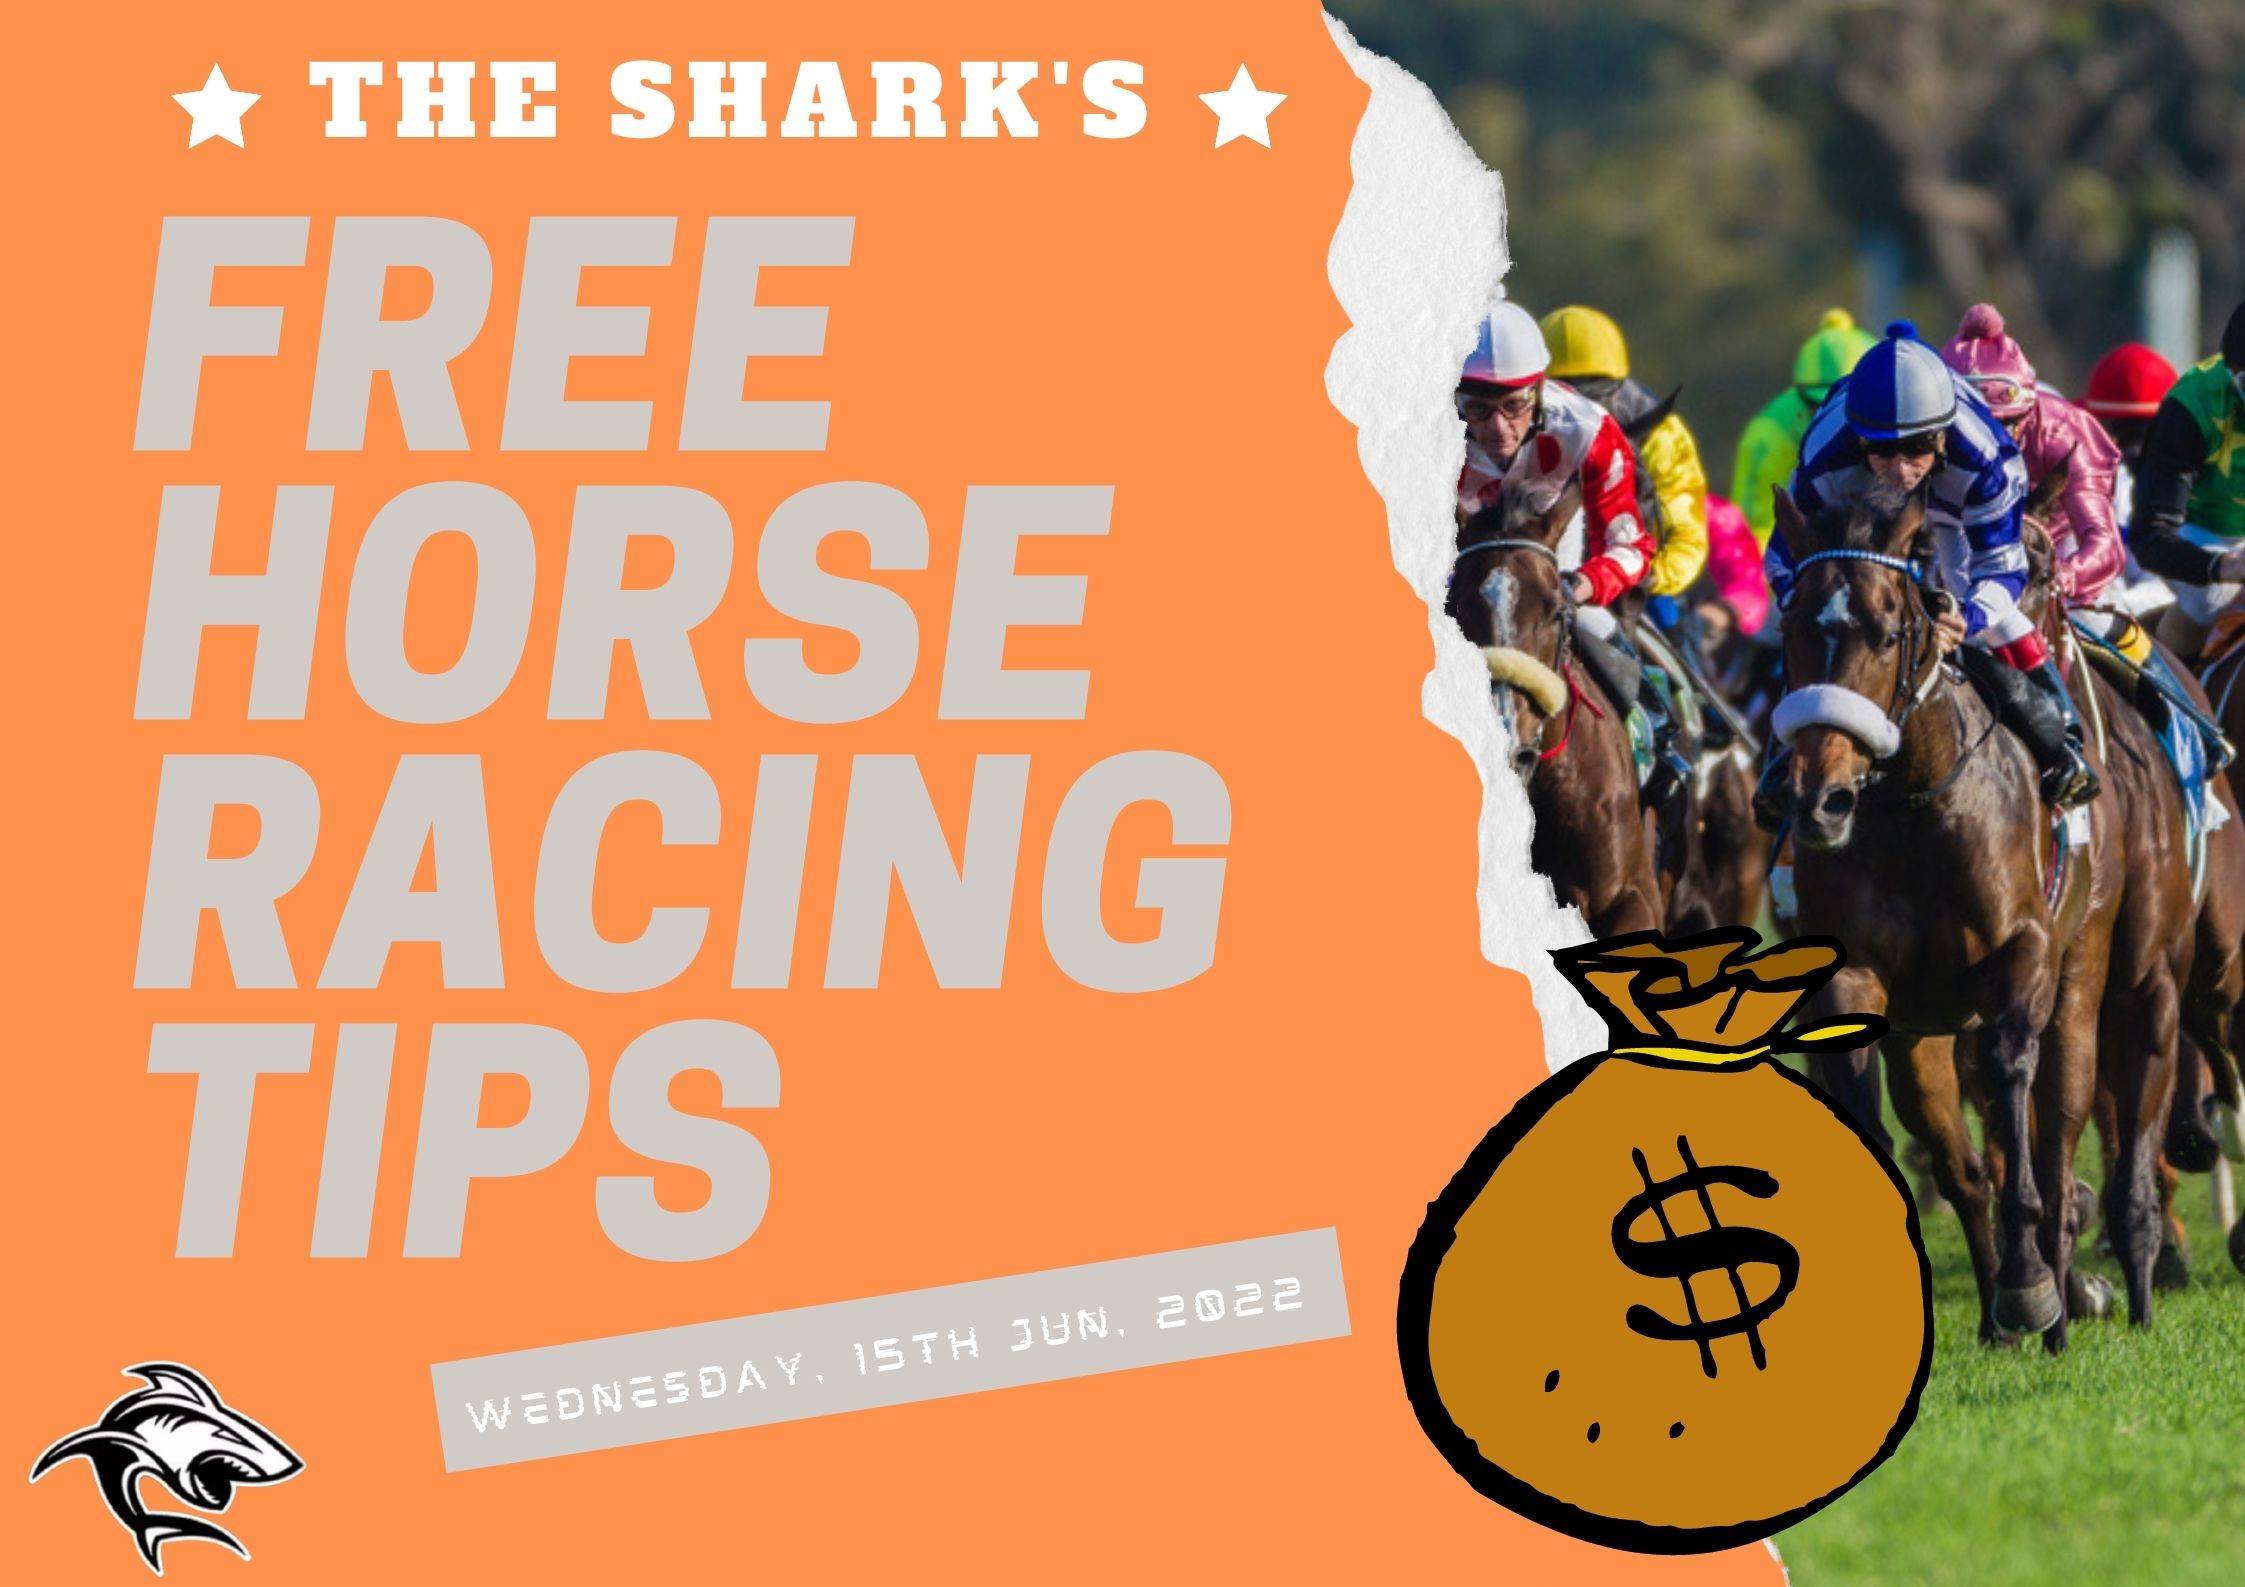 Free Horse Racing Tips - 15th Jun